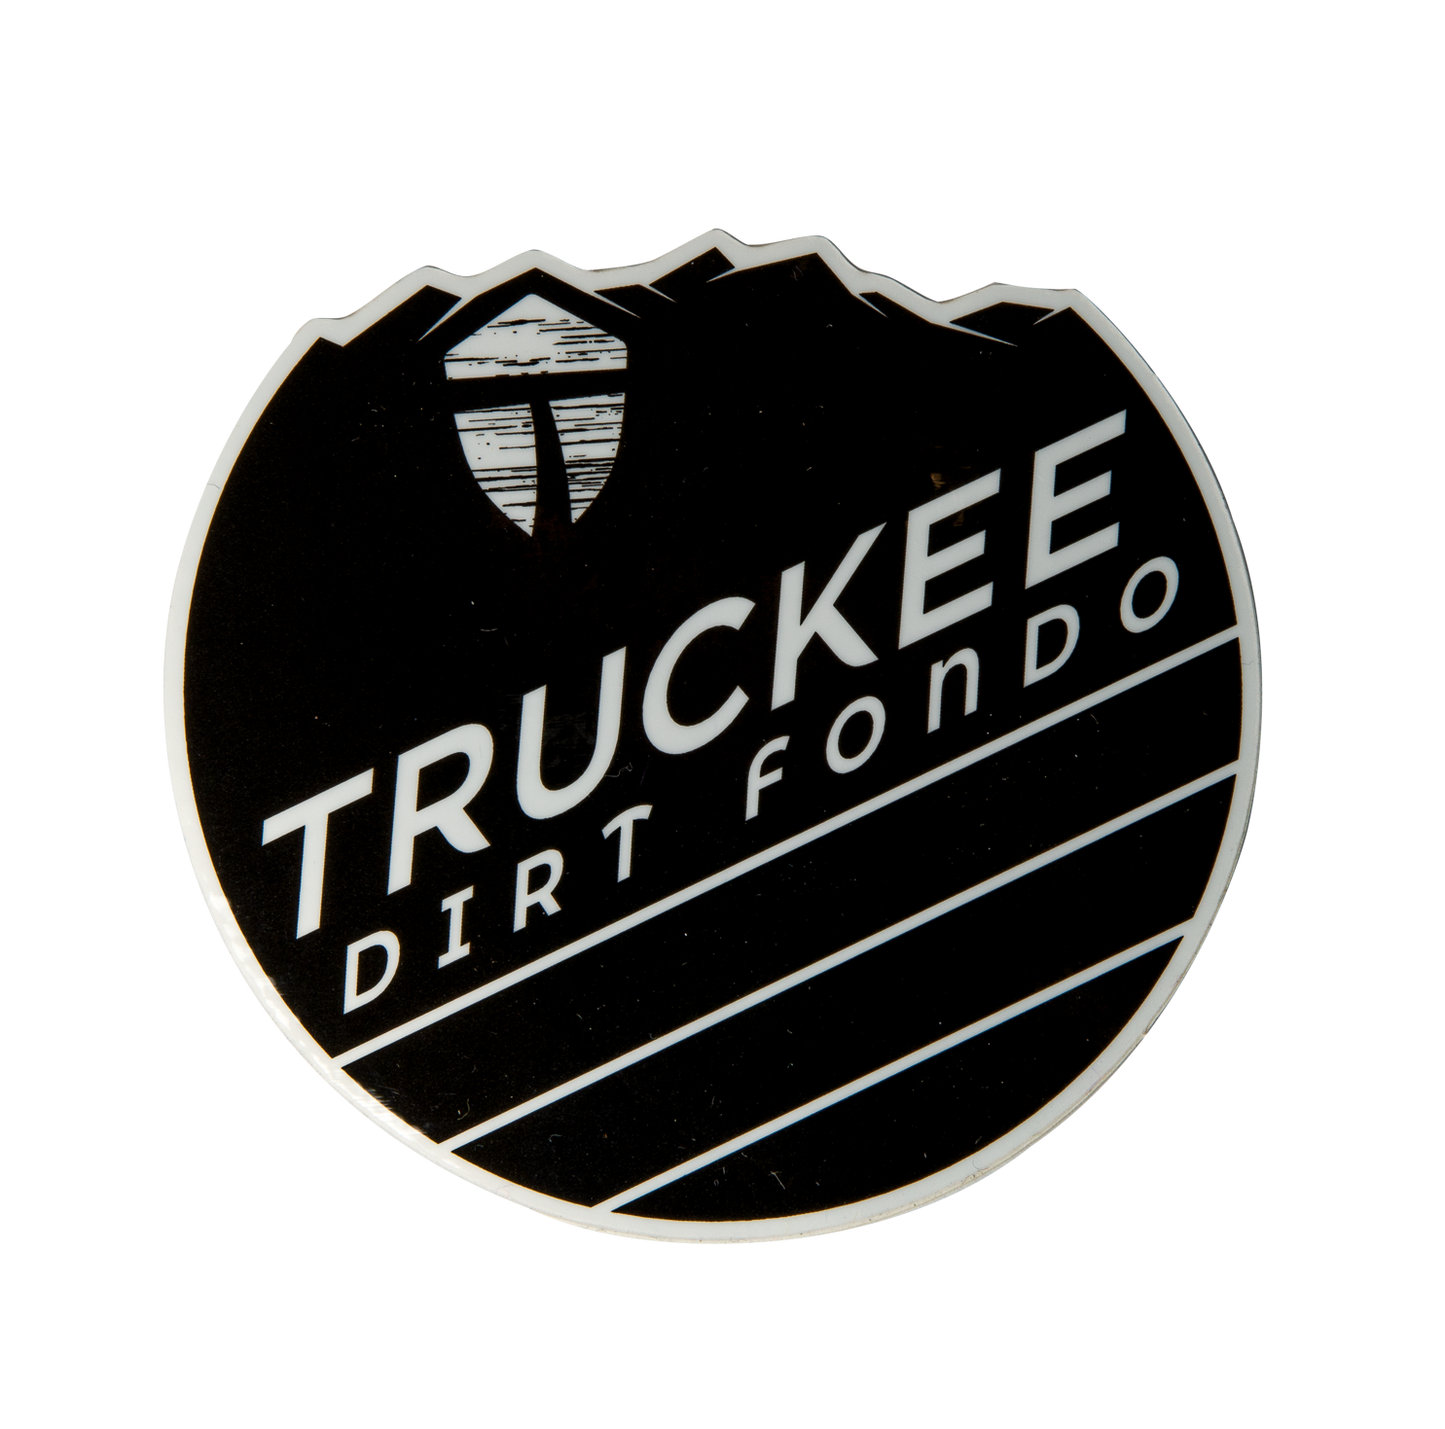 Truckee Dirt Fondo Vinyl Sticker (2020 Edition) 3" - Black & White